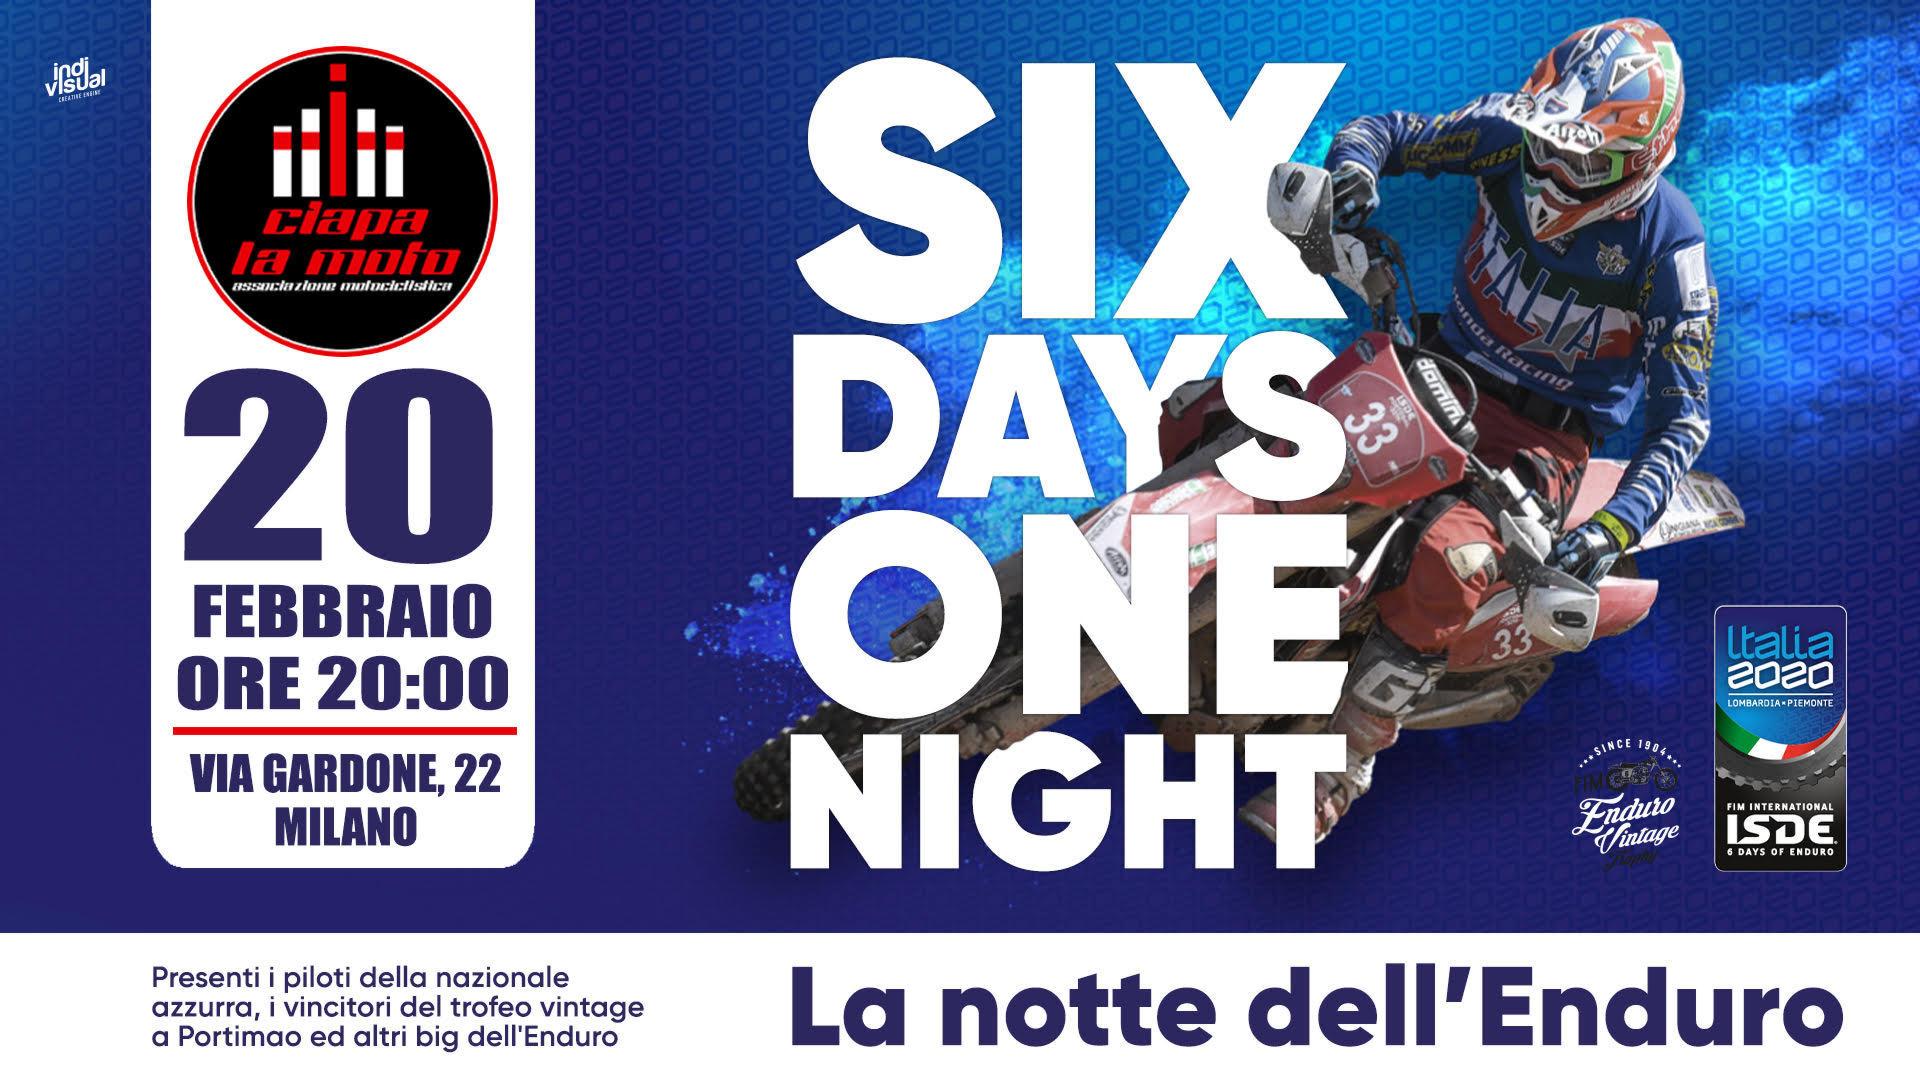 Locandina Six Days One Night